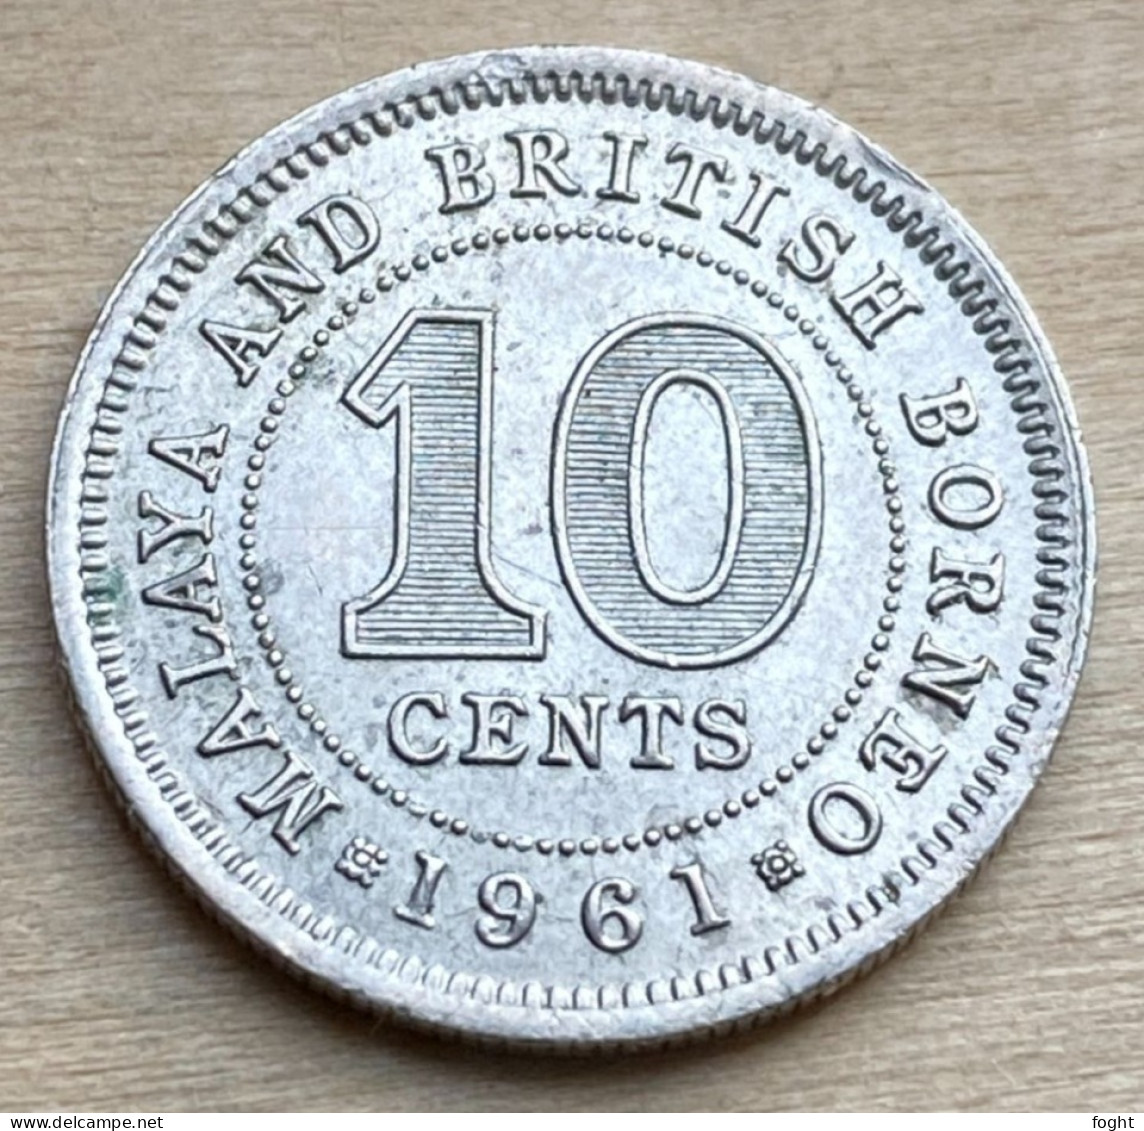 1961 Malaya & British Borneo British Colony Coin 10 Cents,KM#2,7362K - Malasia